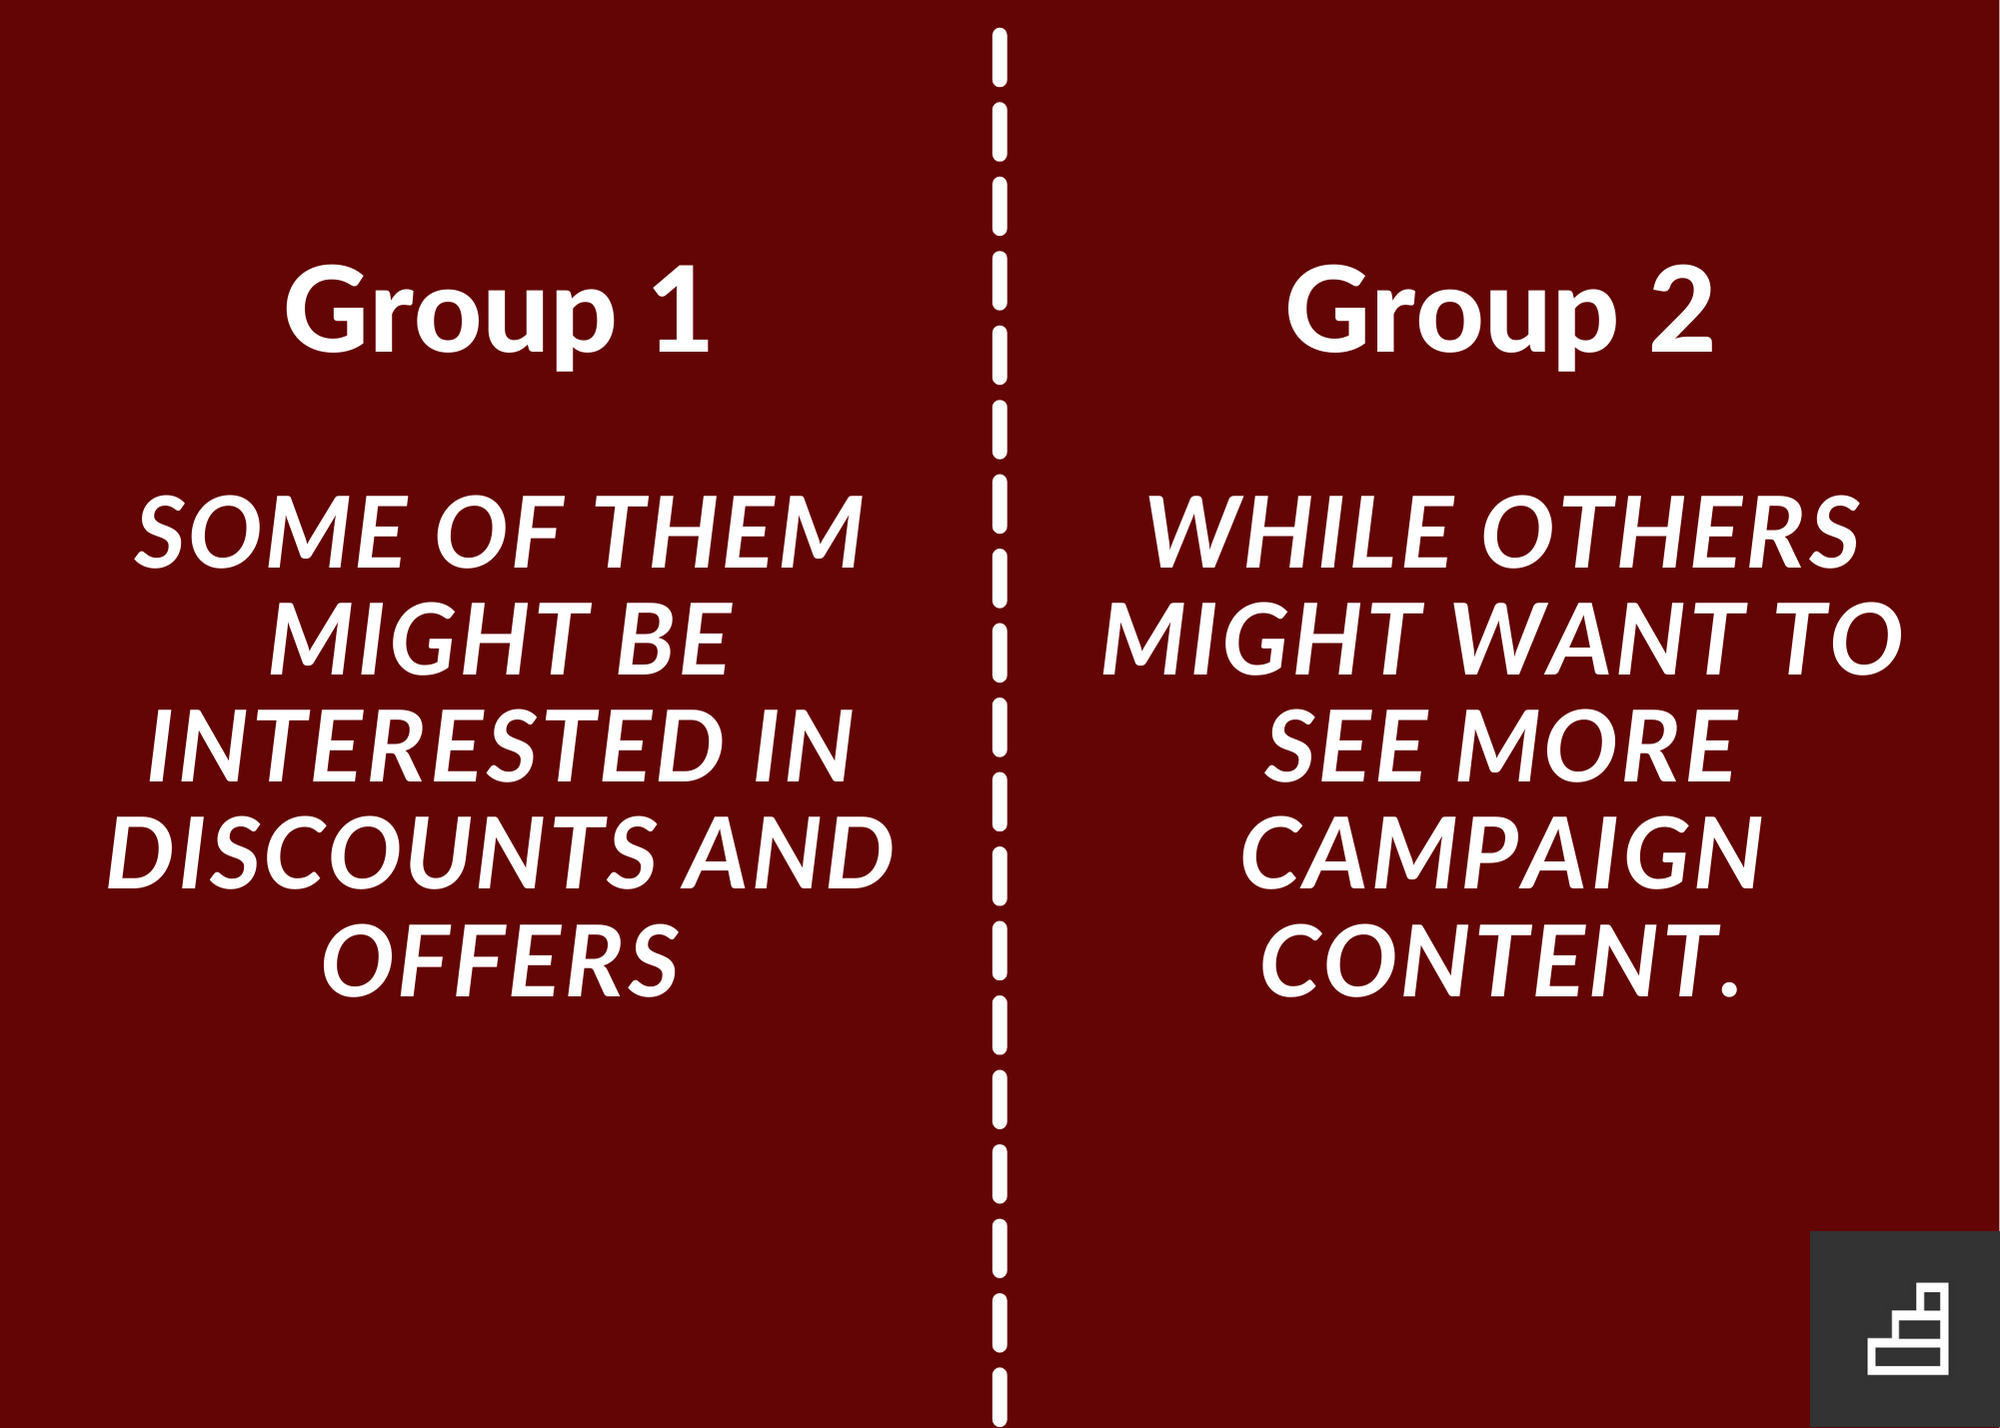 Segmenting groups - example